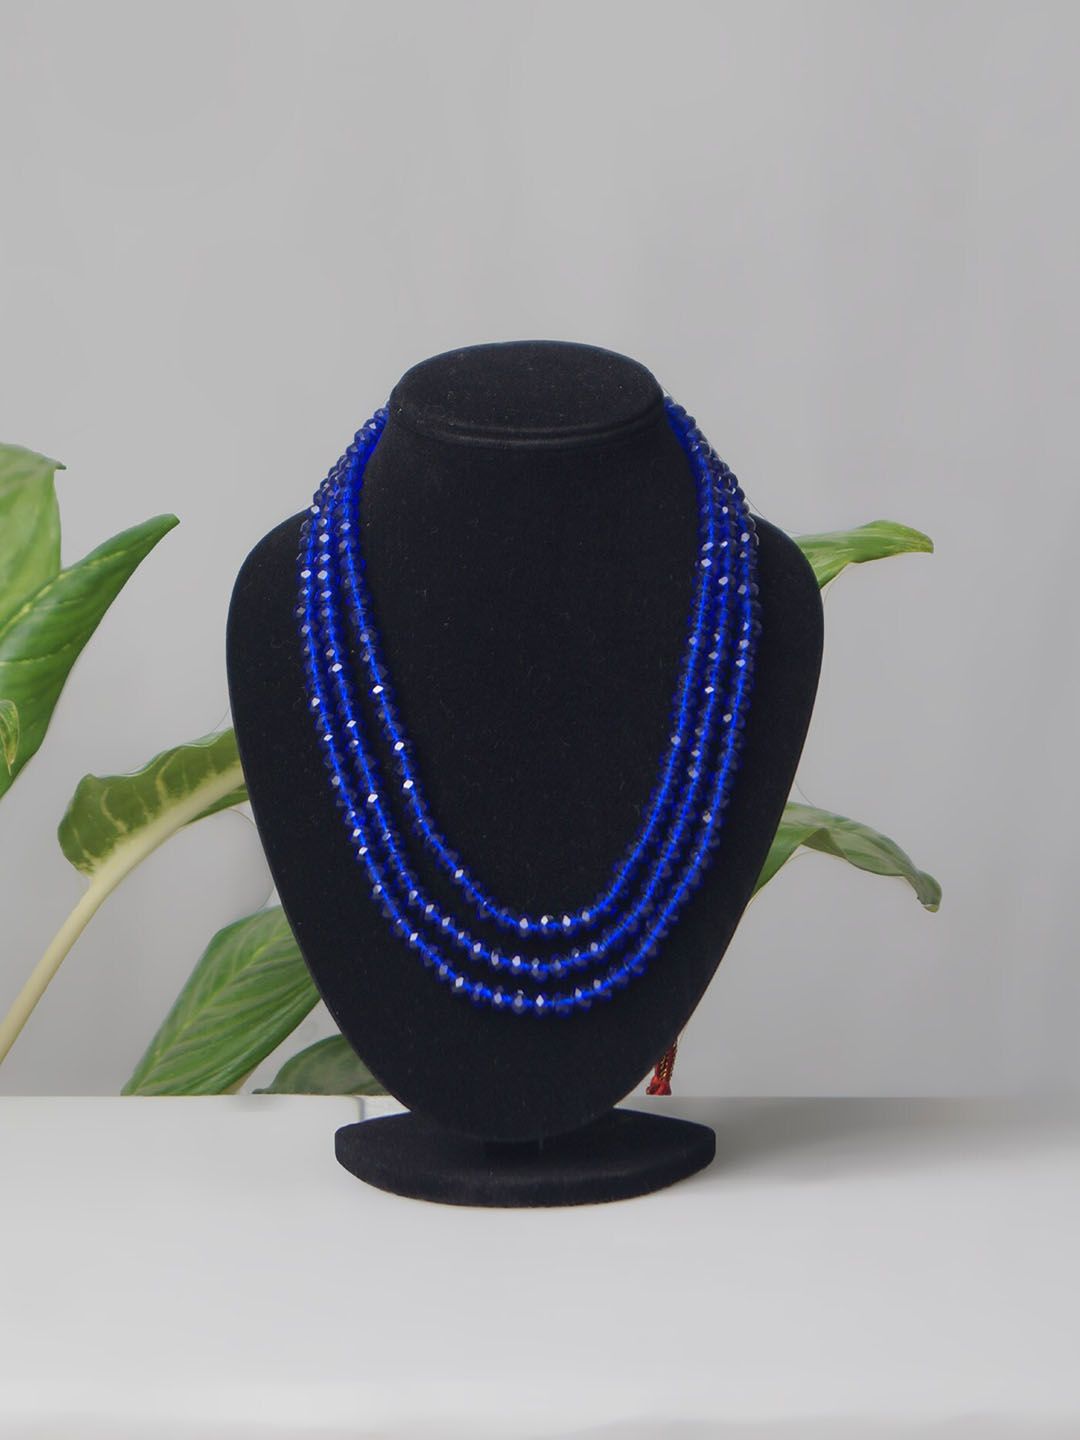 Unnati Silks Navy Blue Layered Amravati Crystal Beads Necklace Price in India